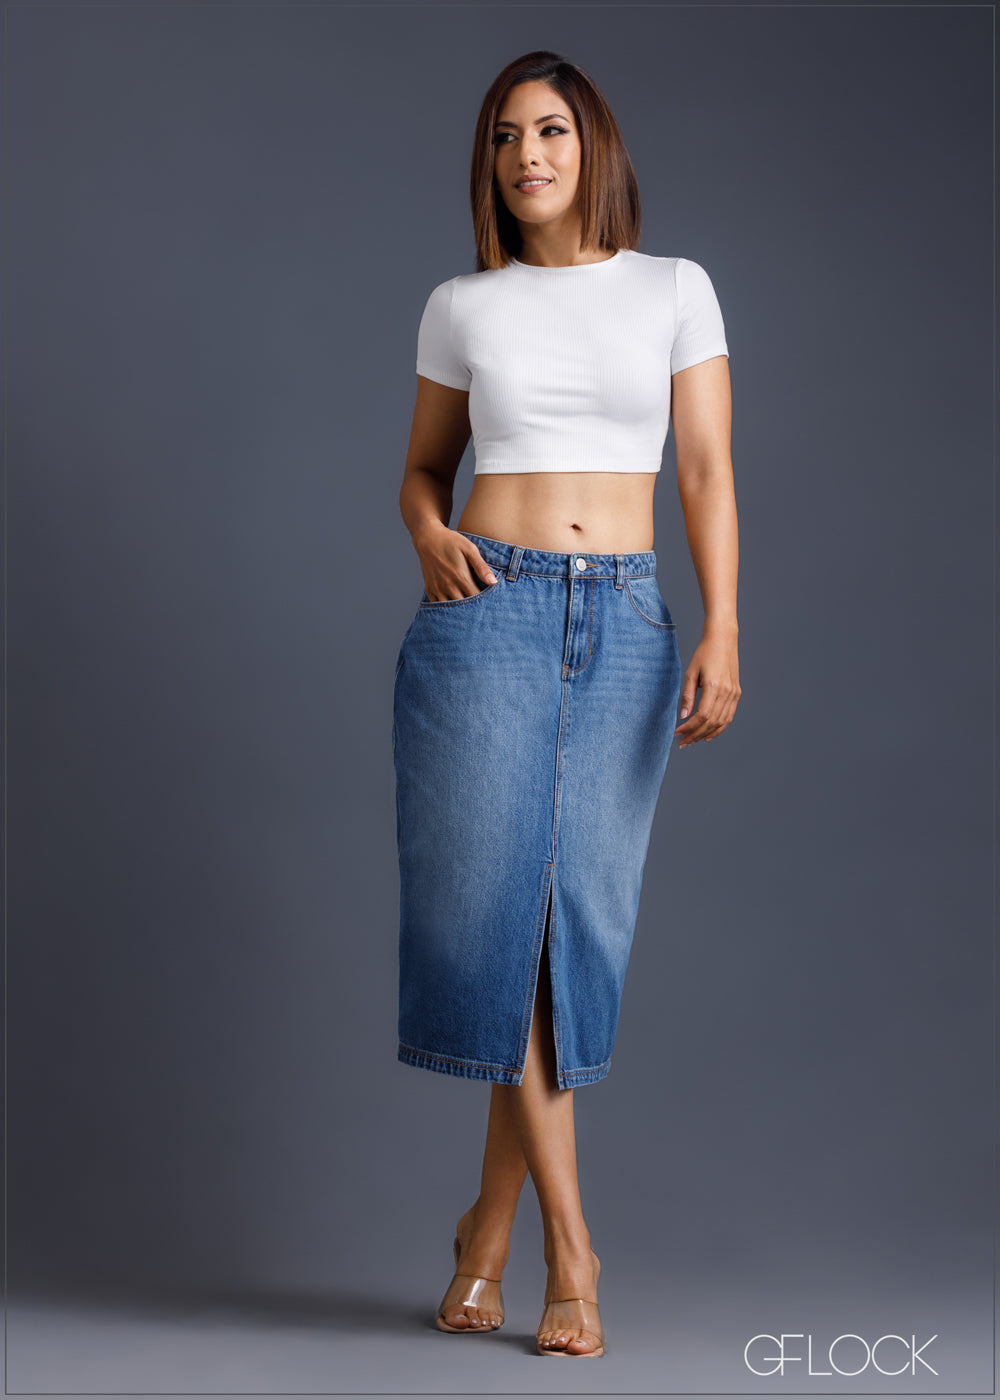 QIPOPIQ Clearance Women's Jeans High Rise Suspender Skirt Pinafore Slim  Mini Short Dress Kaftan Denim Pants - Walmart.com